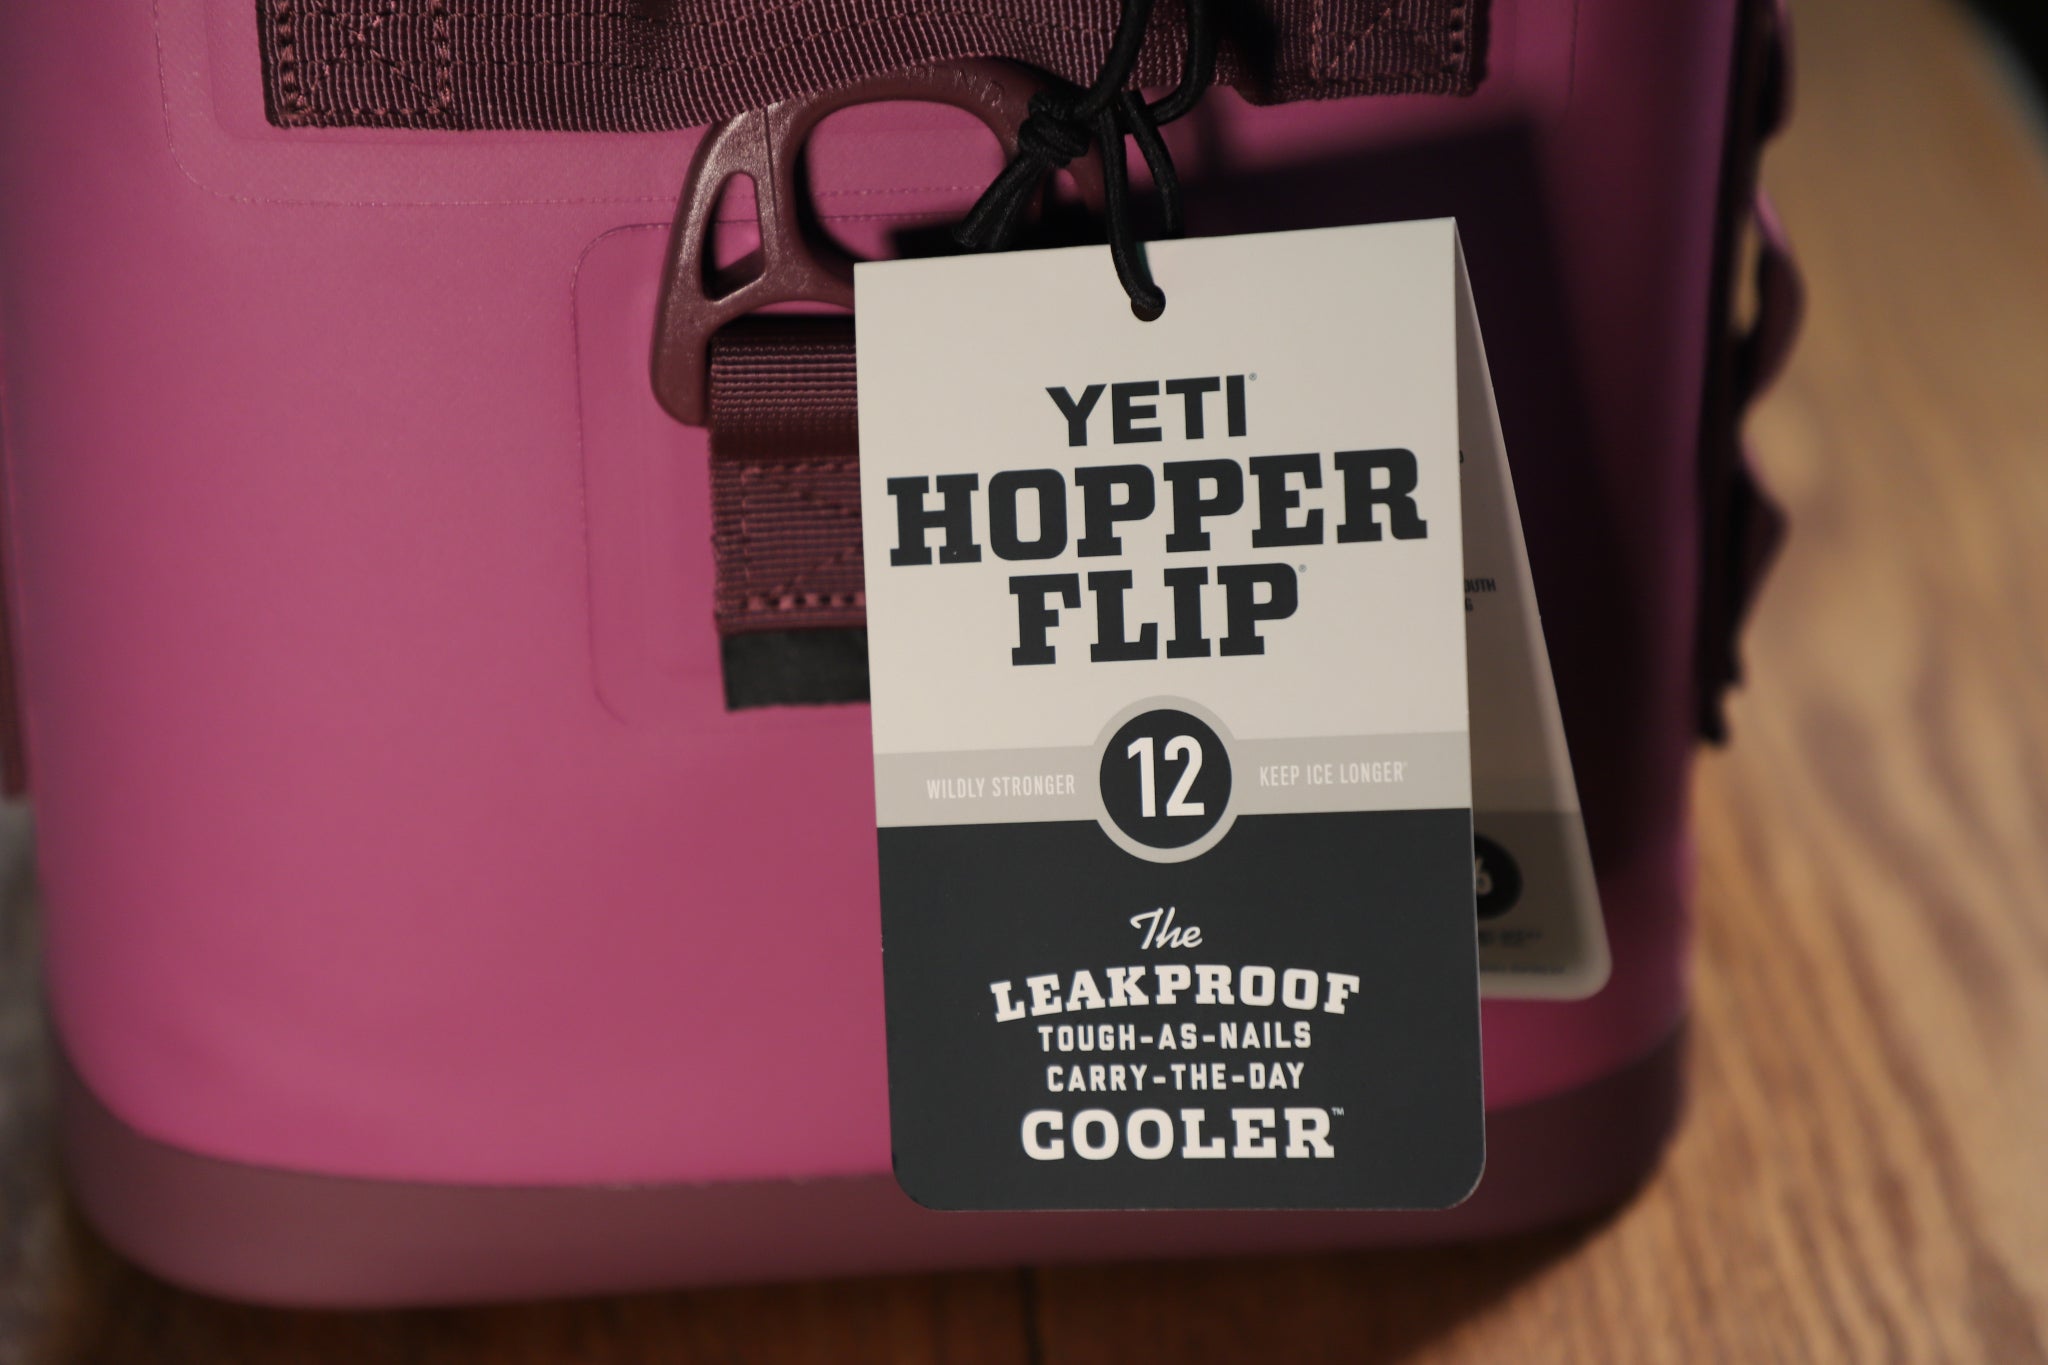 Yeti Hopper Flip 12 cooler review